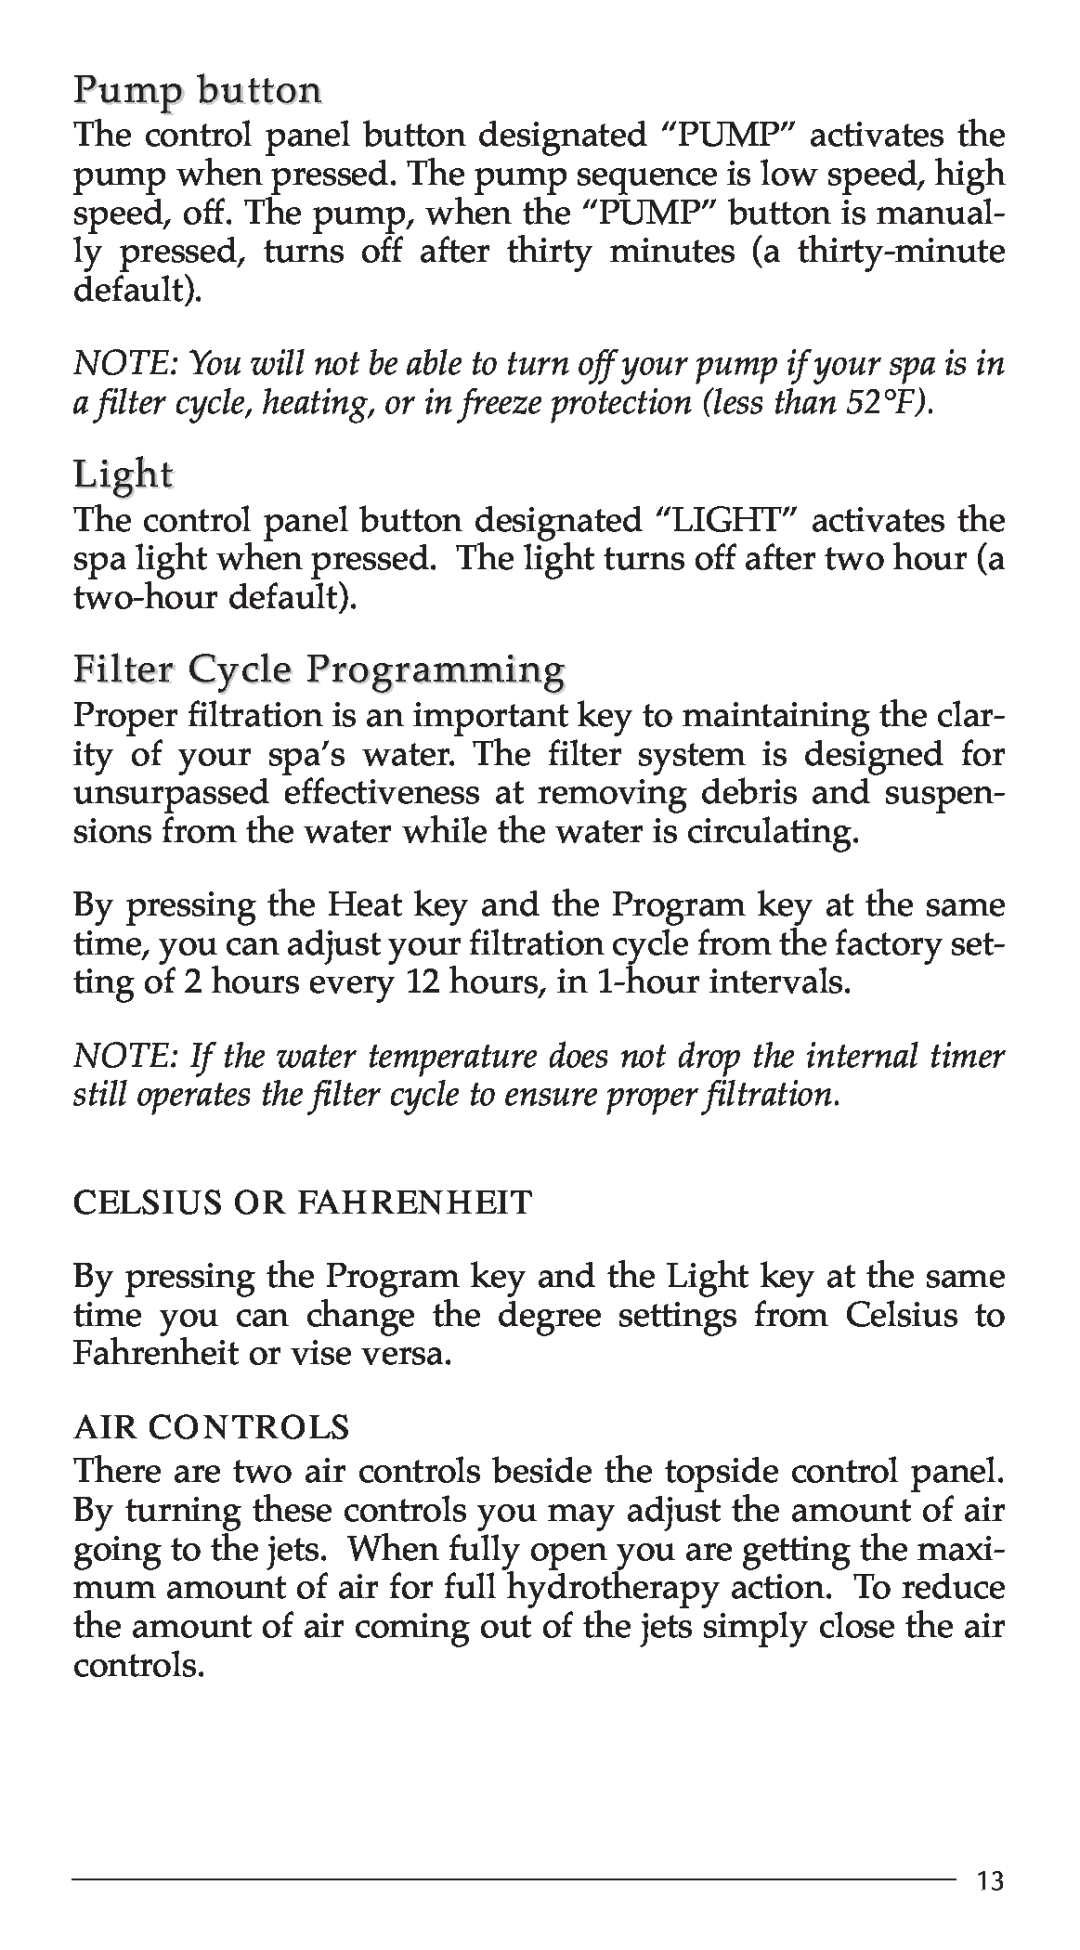 Aruba Spa 2003 Escape, 2003 Breeze manual Pump button, Light, Filter Cycle Programming, Celsius Or Fahrenheit, Air Controls 